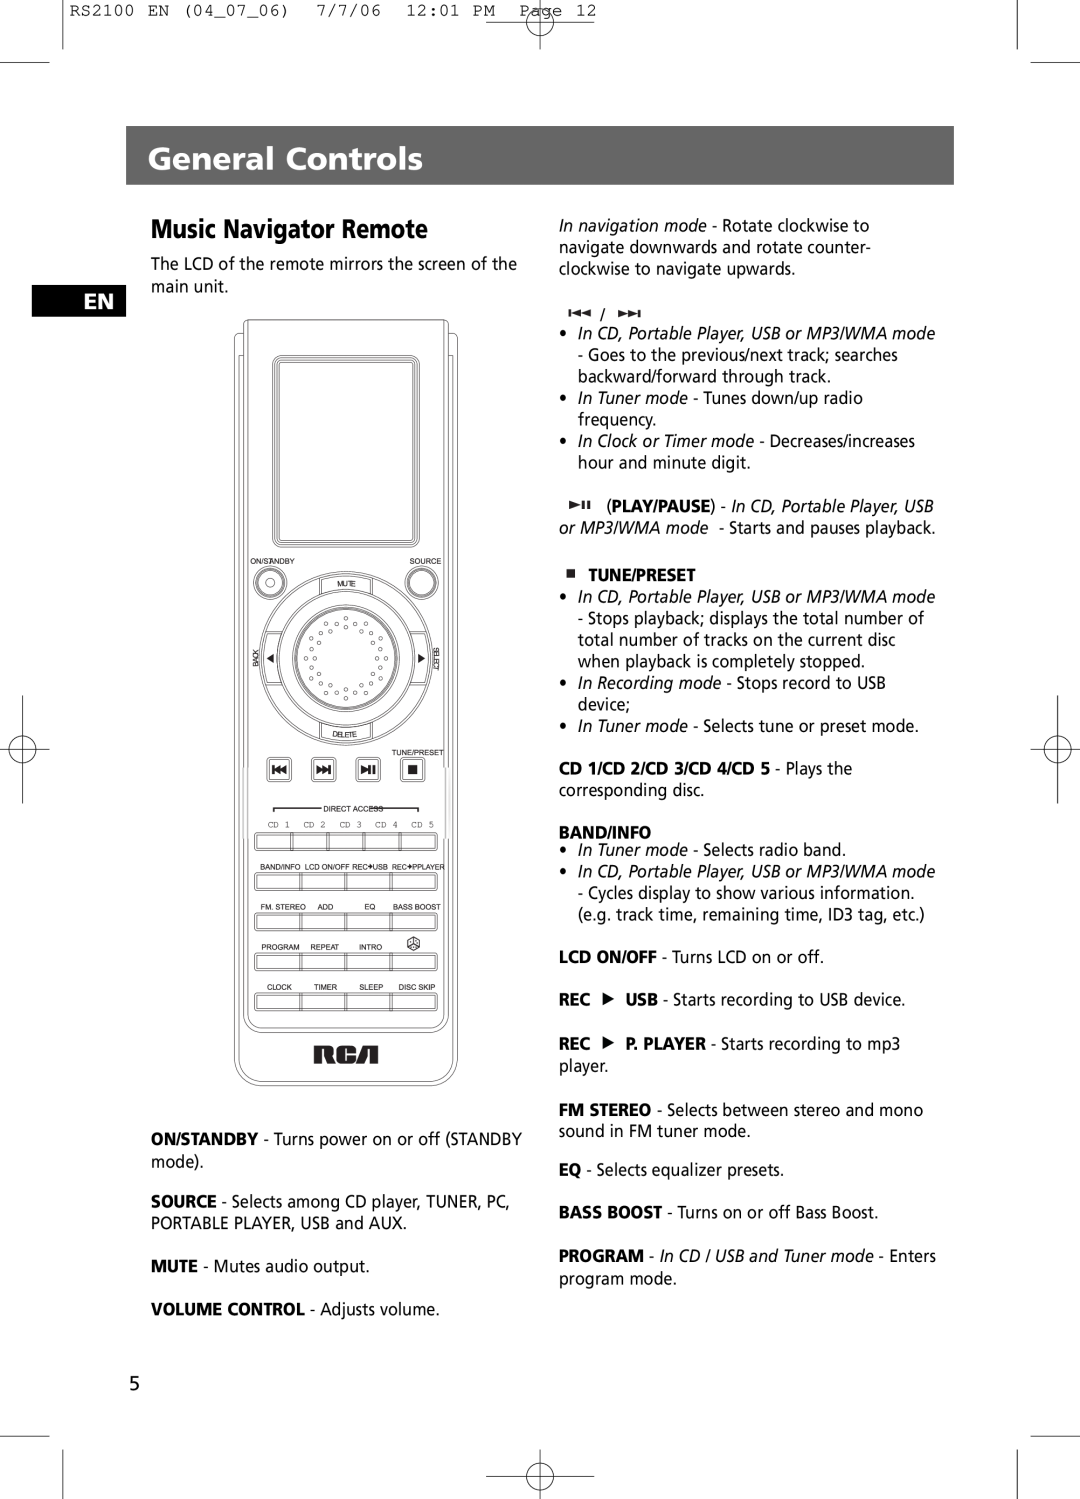 RCA RS2100 user manual Music Navigator Remote, General Controls, Tune/Preset, Band/Info 